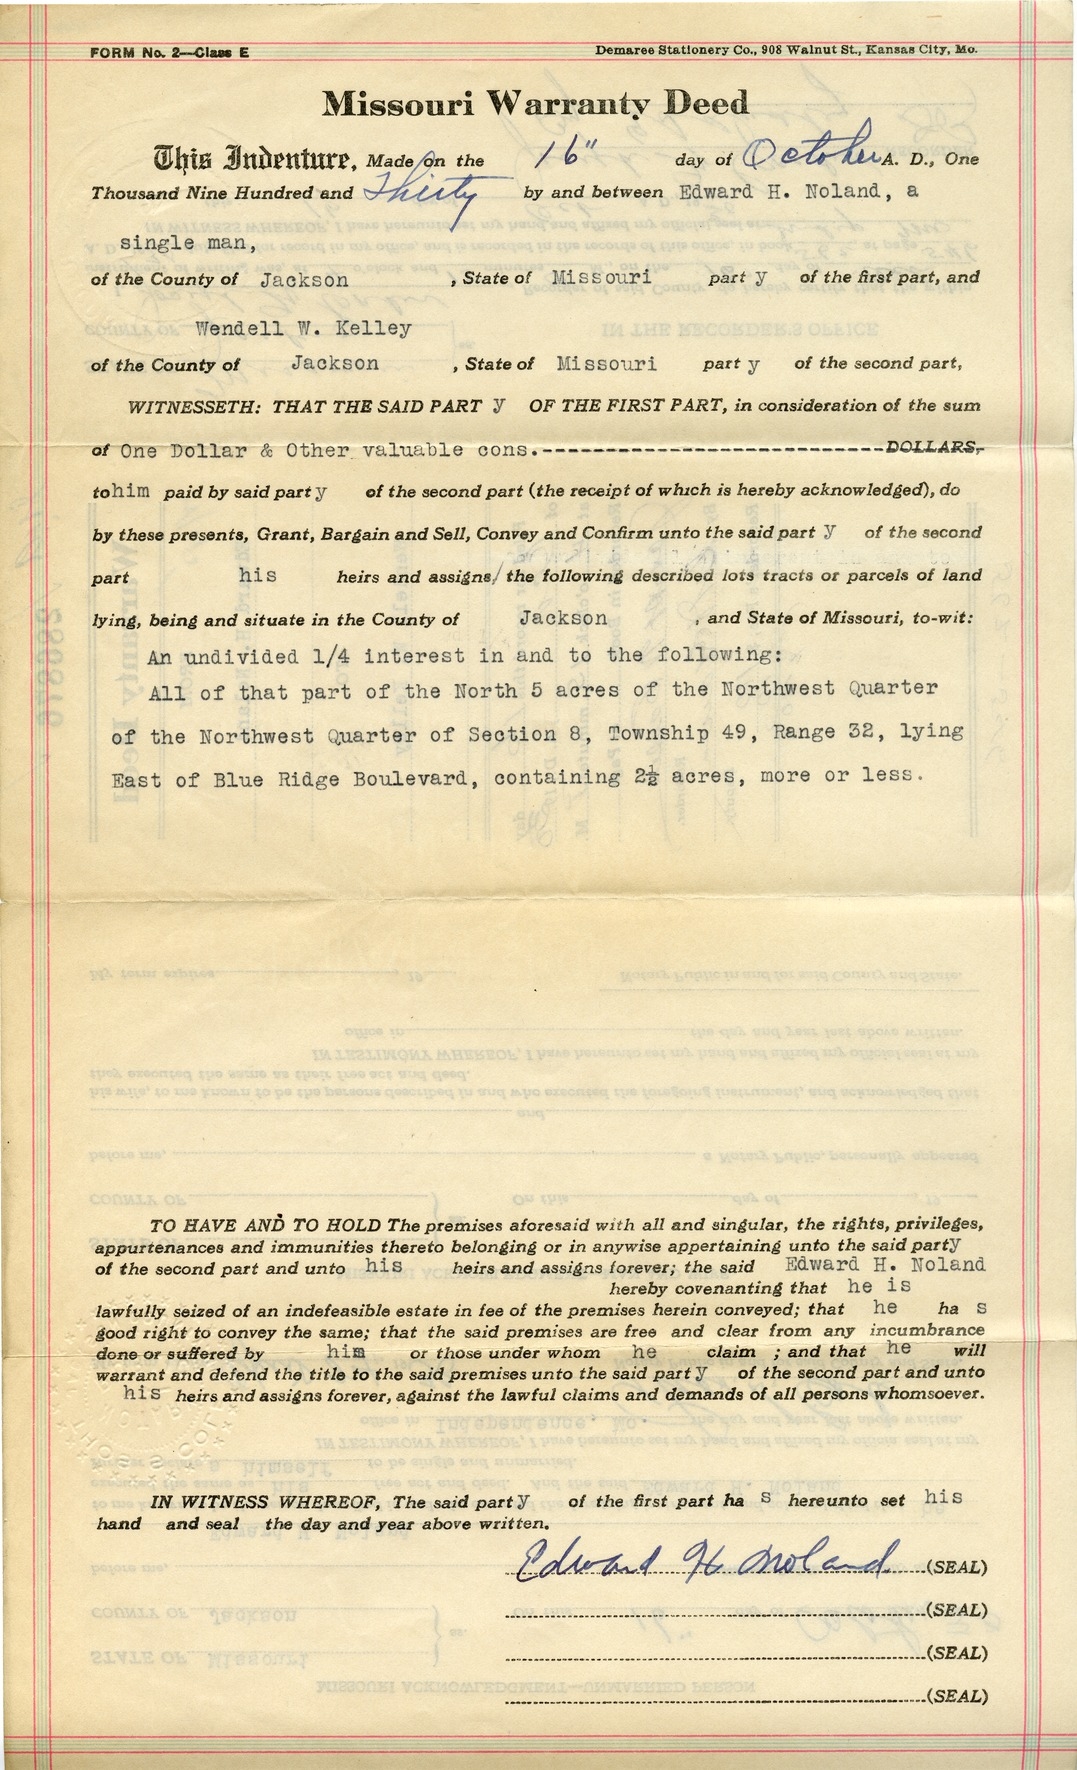 Warranty Deed from Edward H. Noland to Wendell W. Kelley